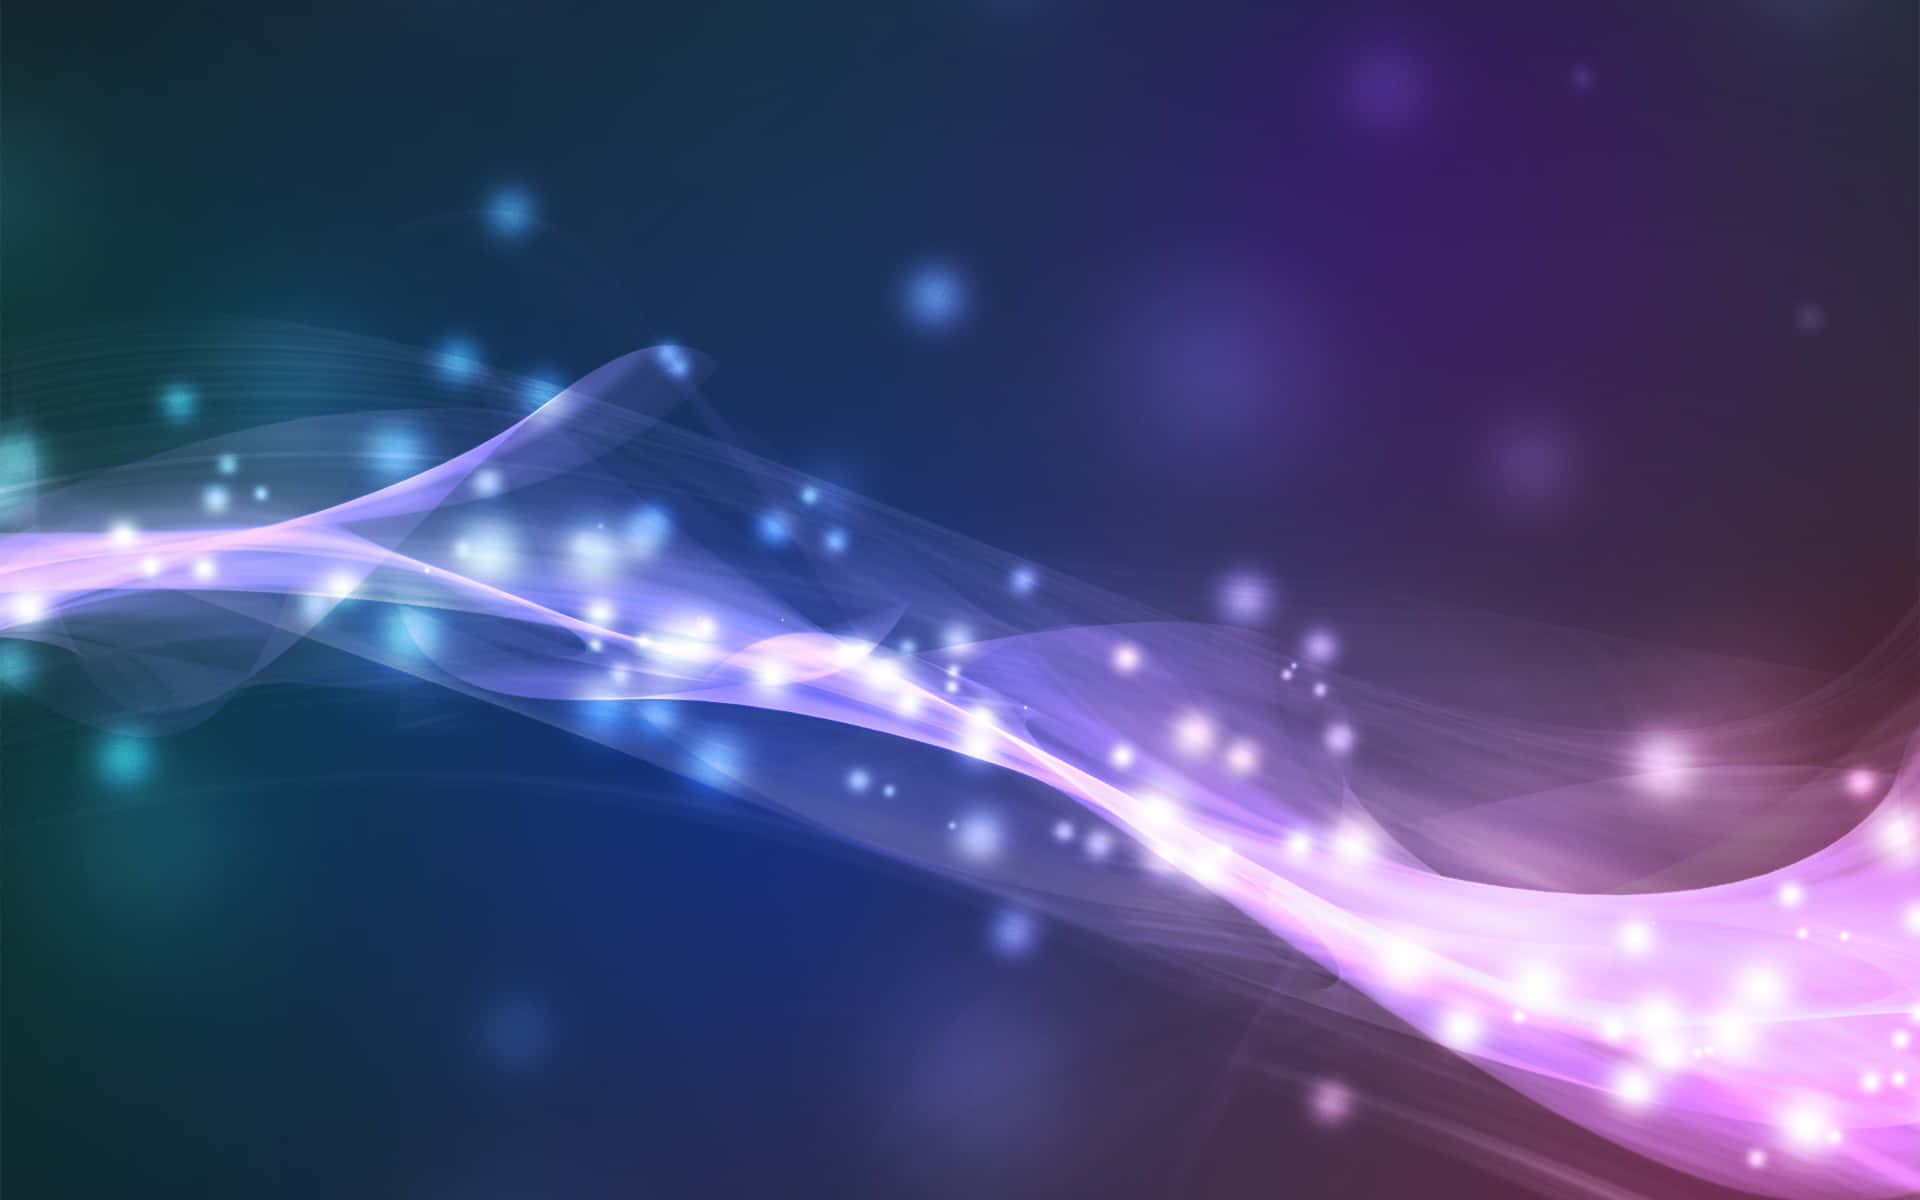 Brighten up your workspace with this vibrant Blue-Purple Desktop Wallpaper Wallpaper